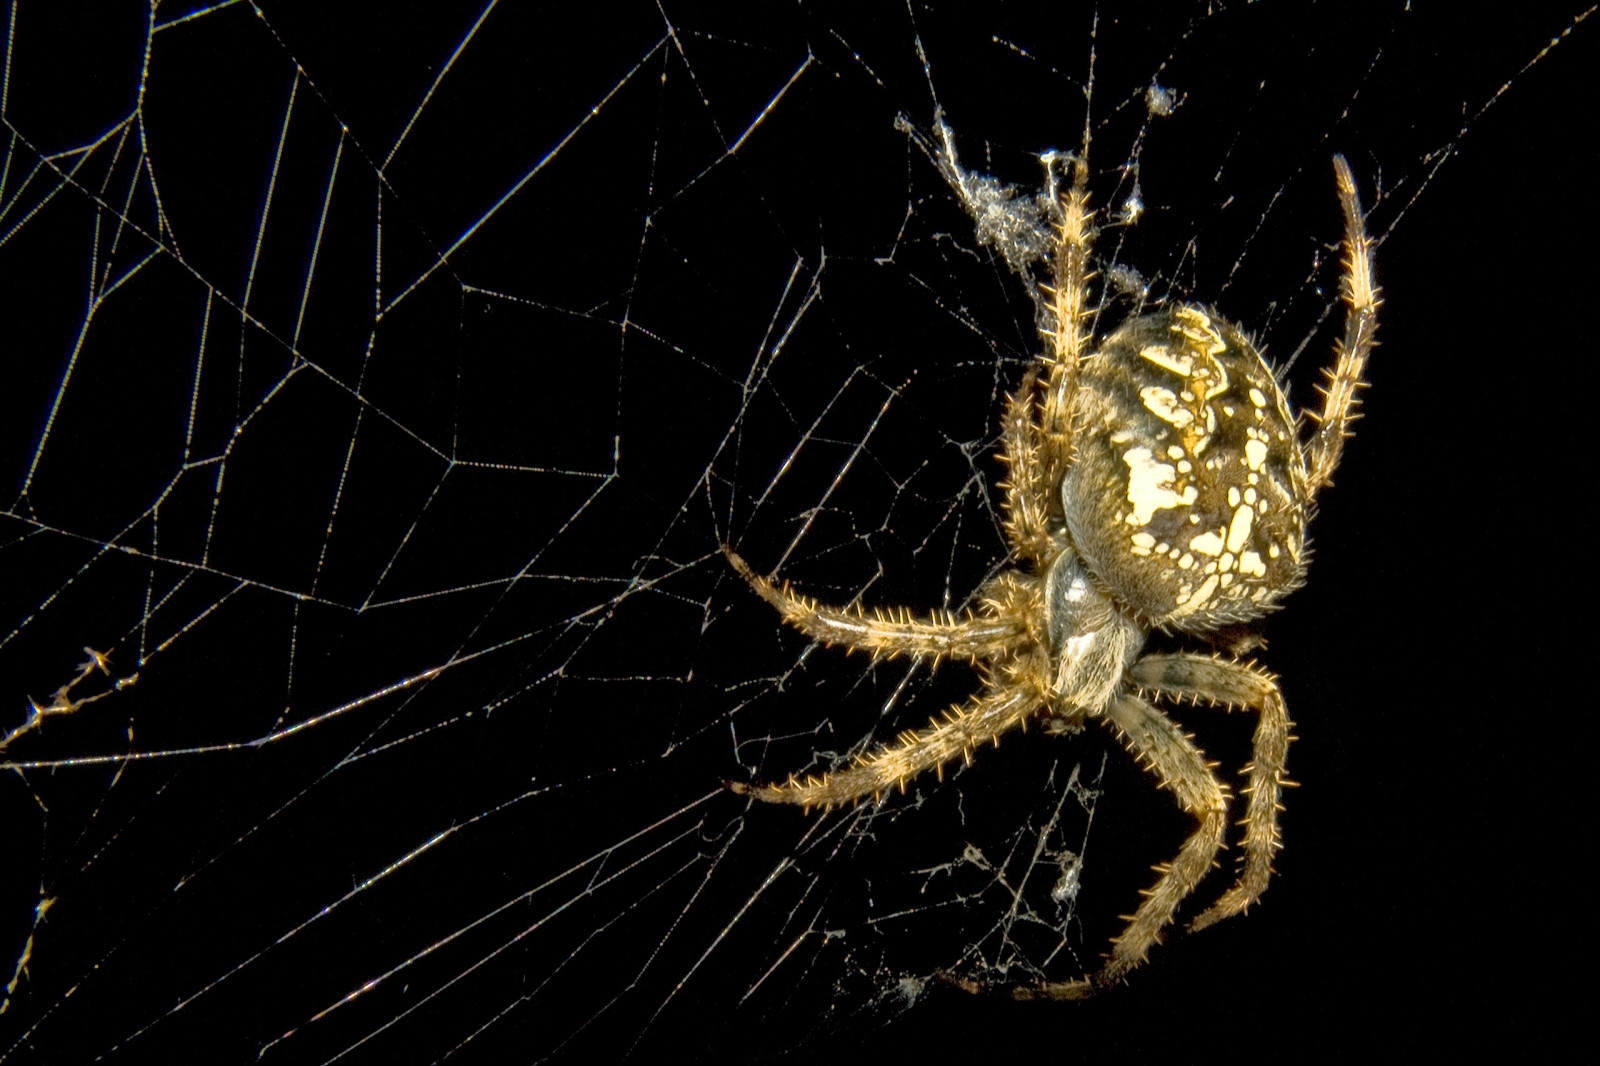 alam, Latar Belakang, web, serangga, Laba-laba